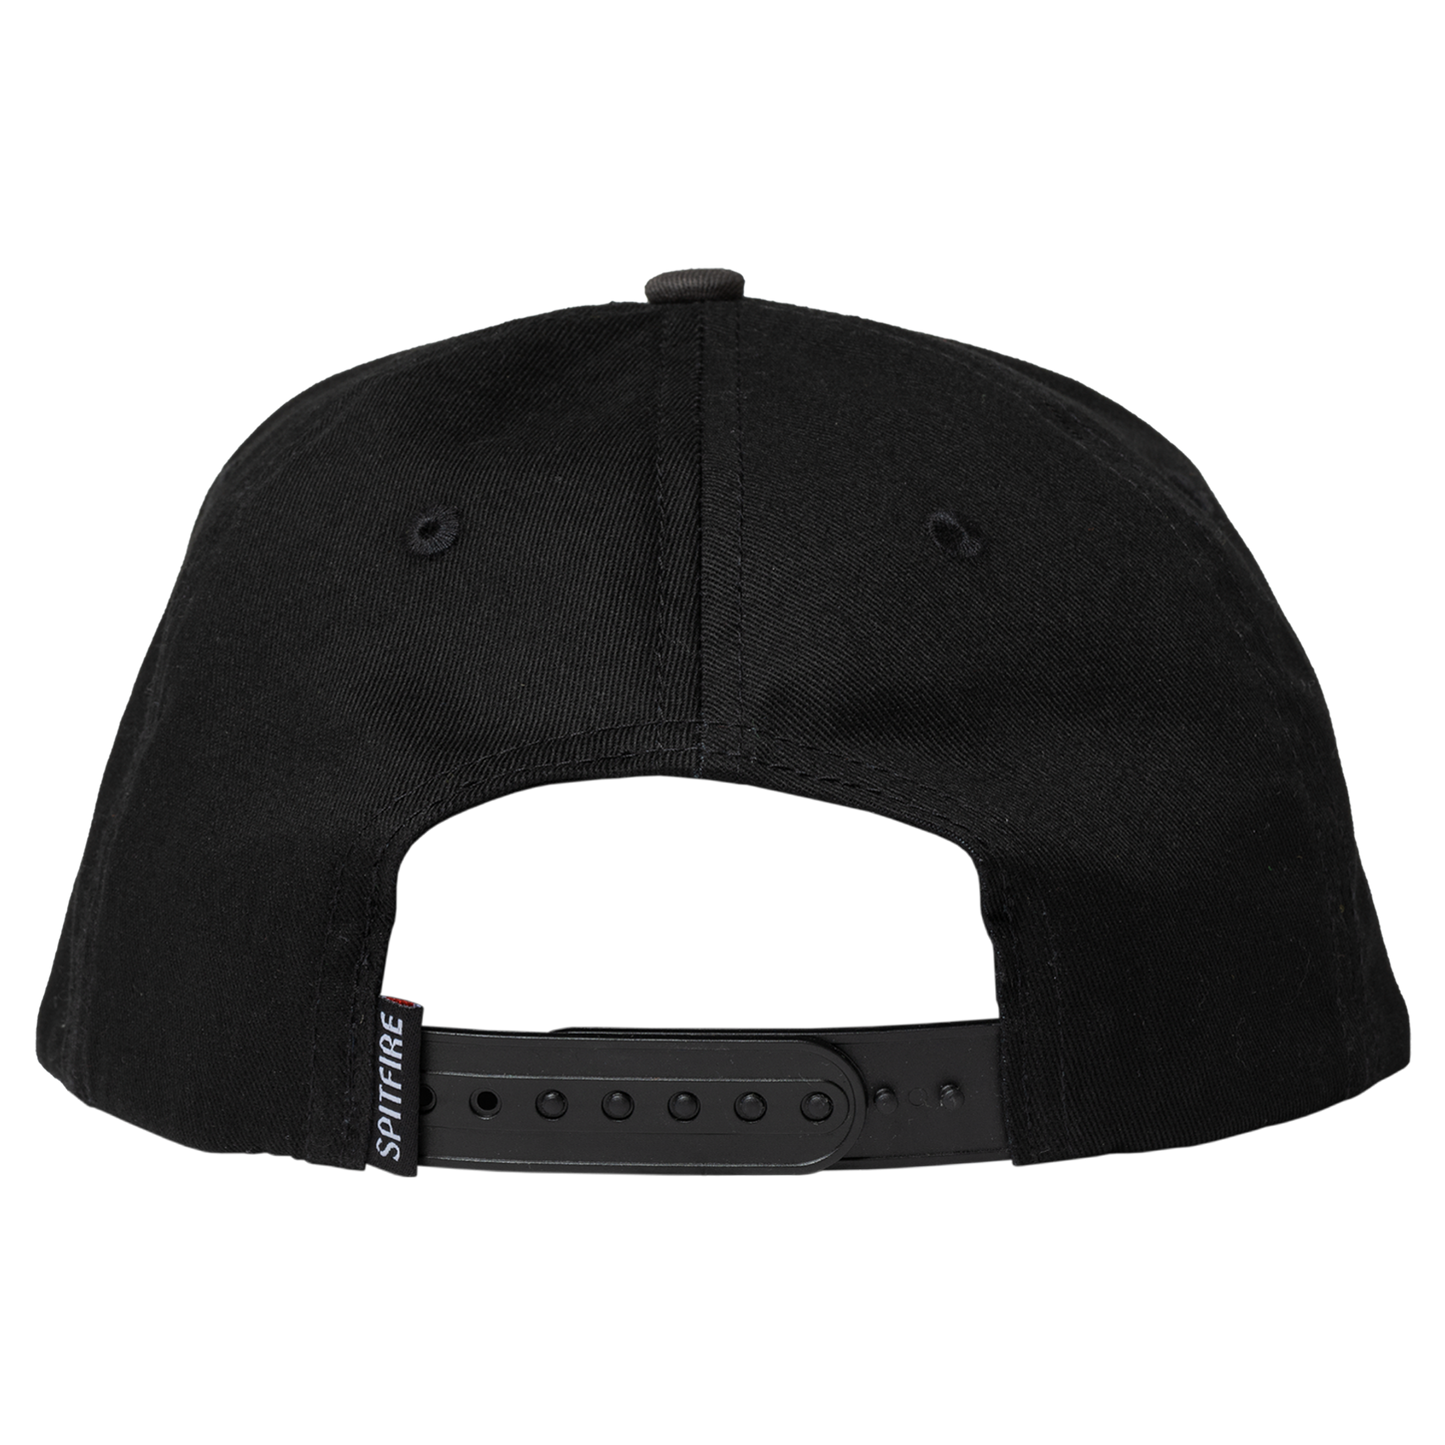 Spitfire Classic '87 Swirl Patch Snapback Hat Black